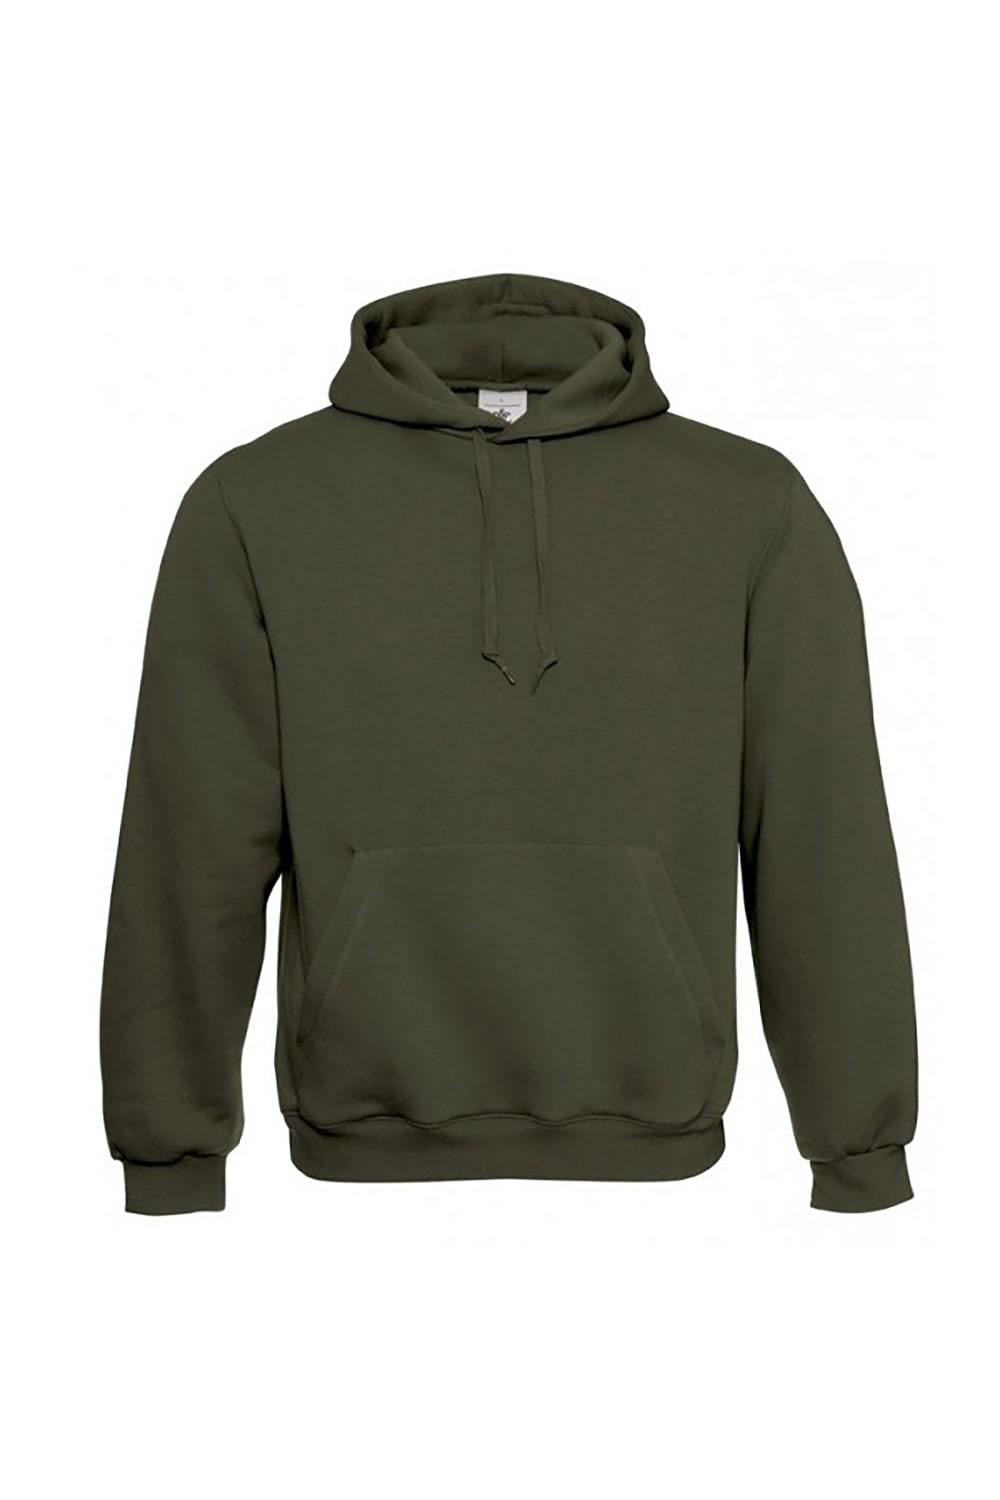 B&C Mens Hooded Sweatshirt / Mens Sweatshirts & Hoodies (Khaki)